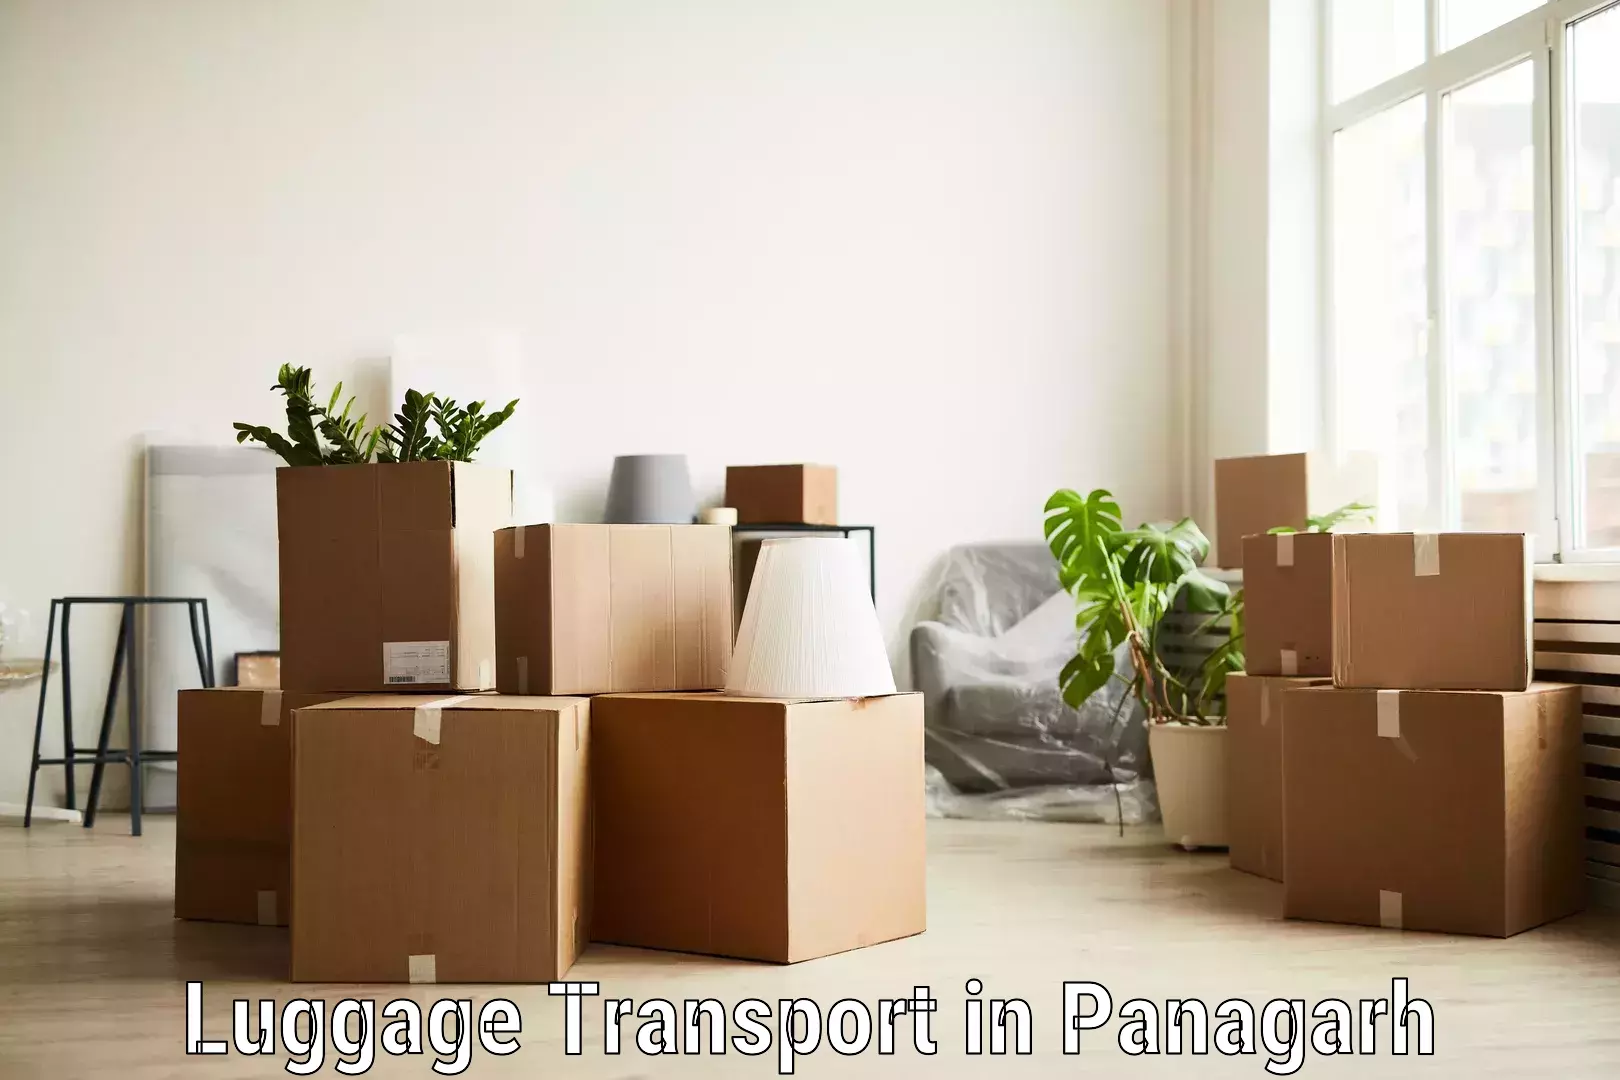 Luggage forwarding service in Panagarh